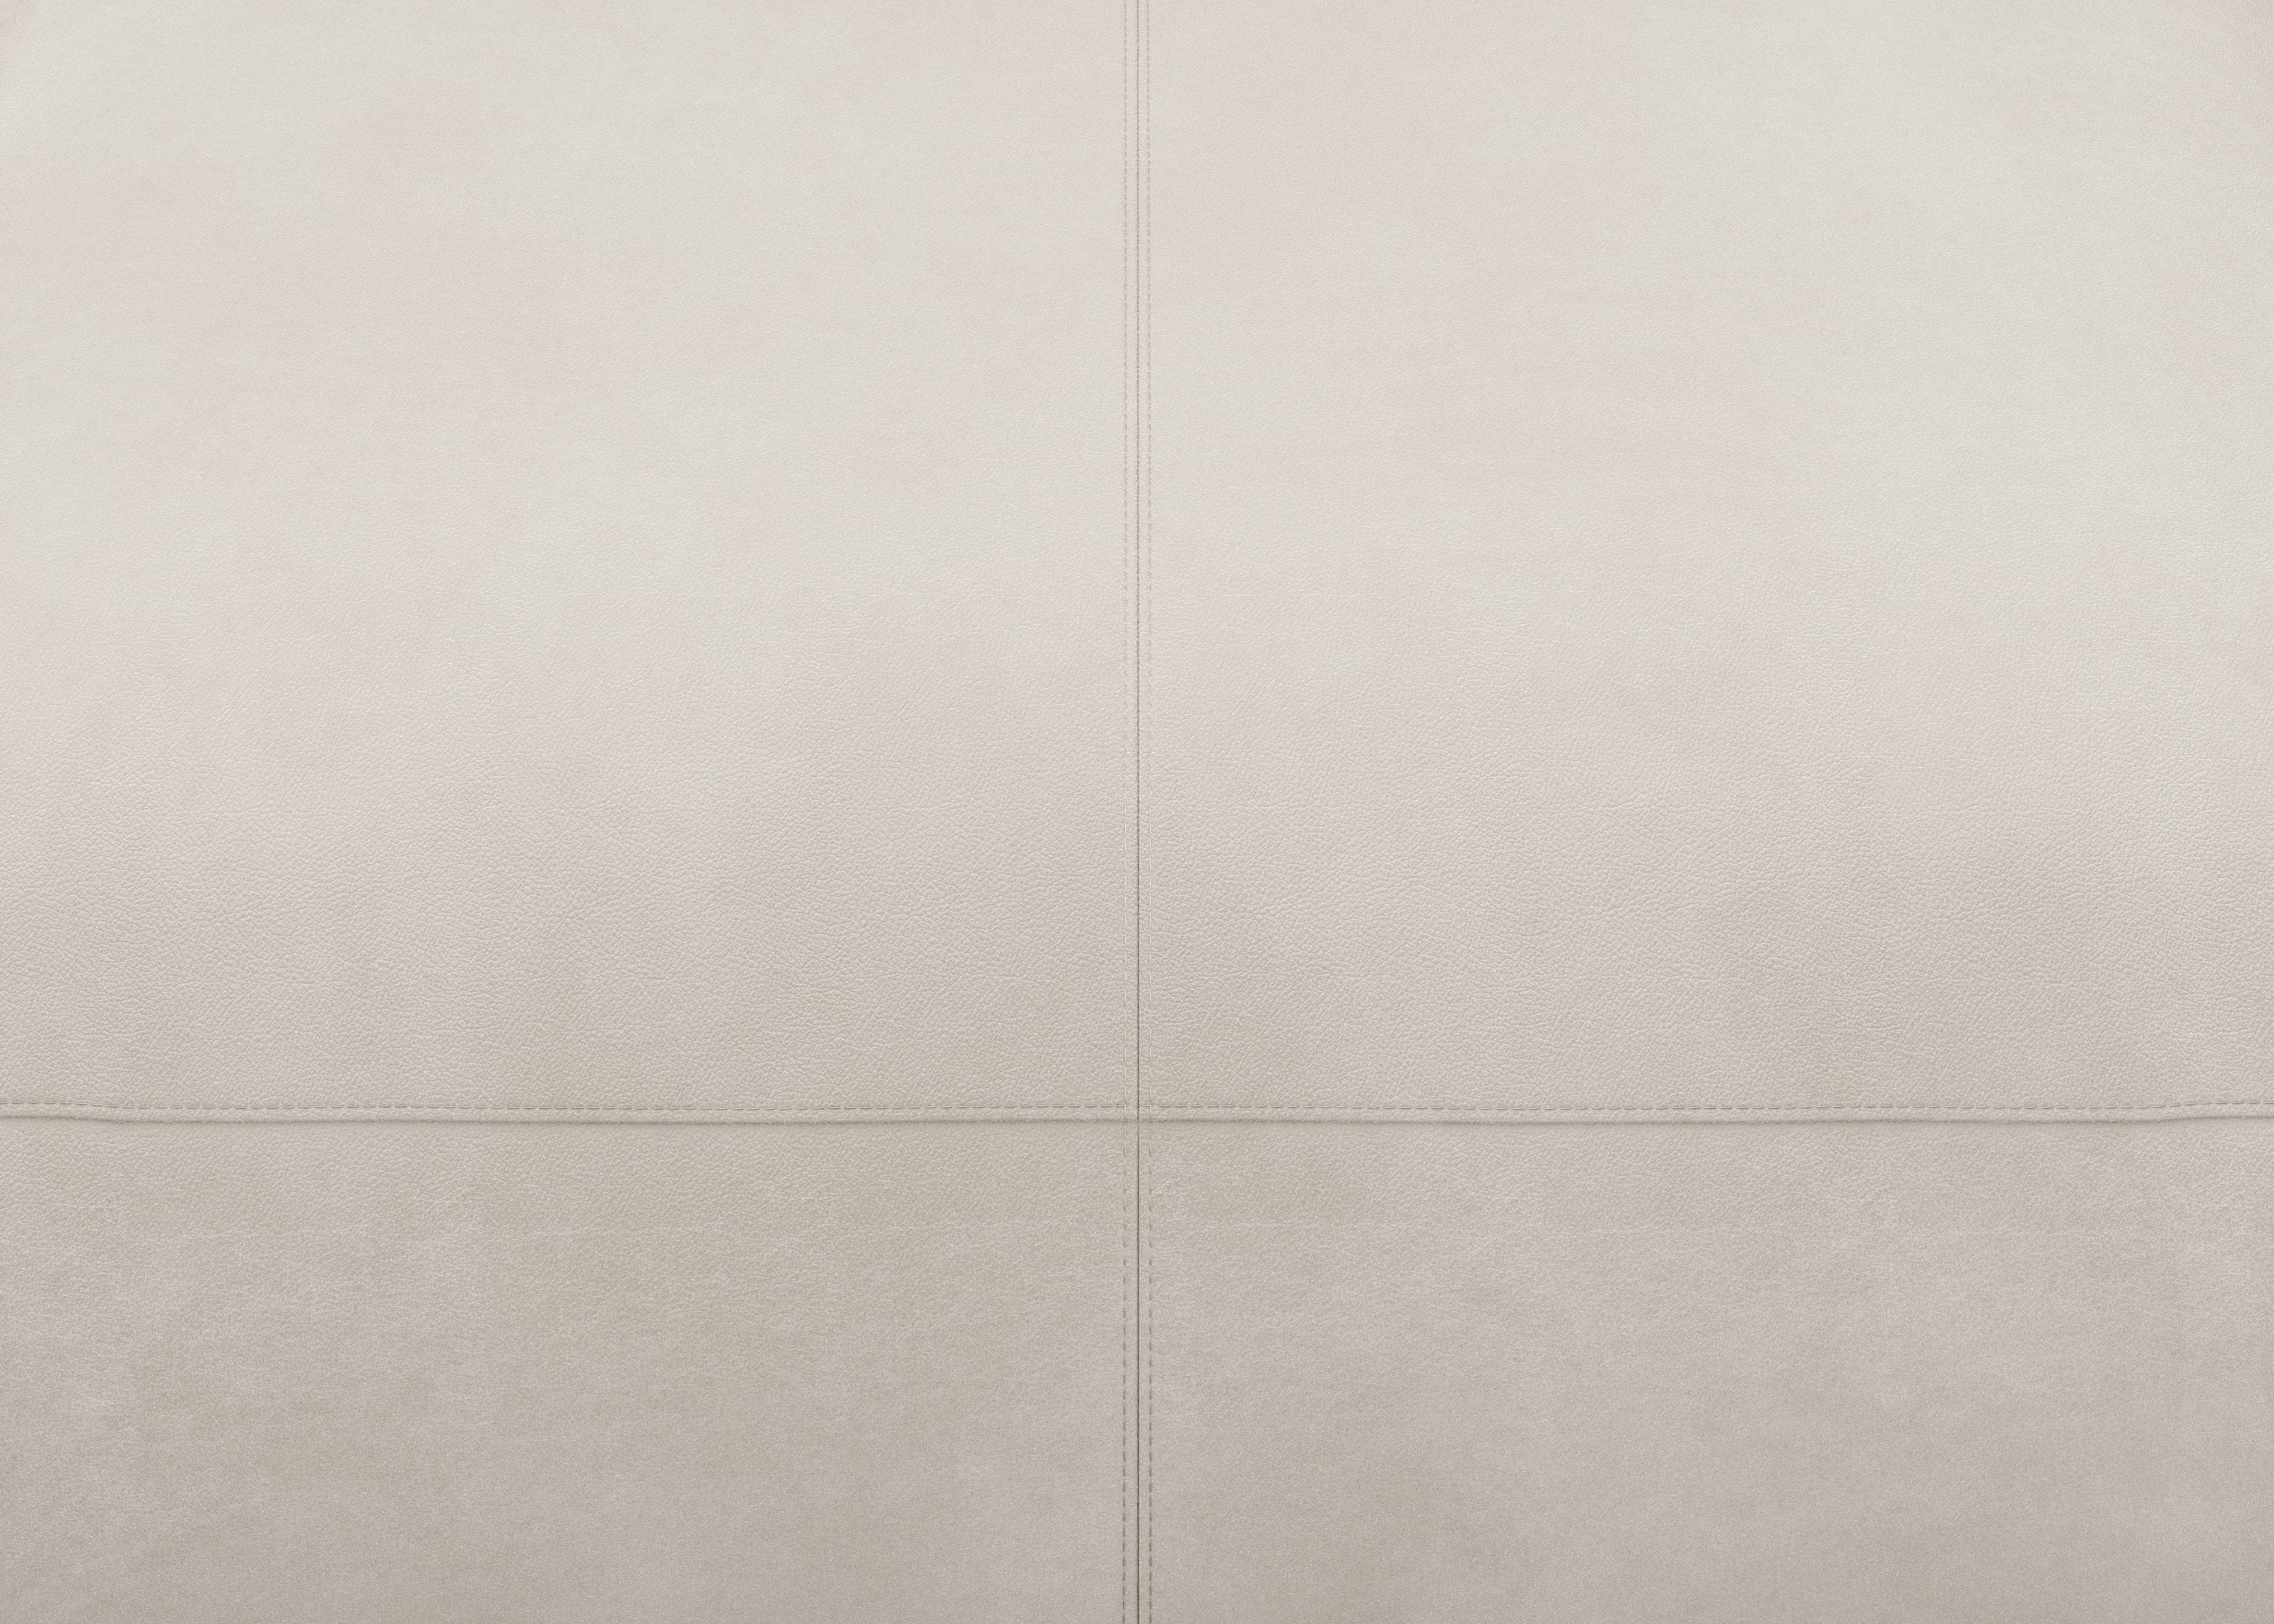 vetsak®-Sofa Daybed L Leather light grey